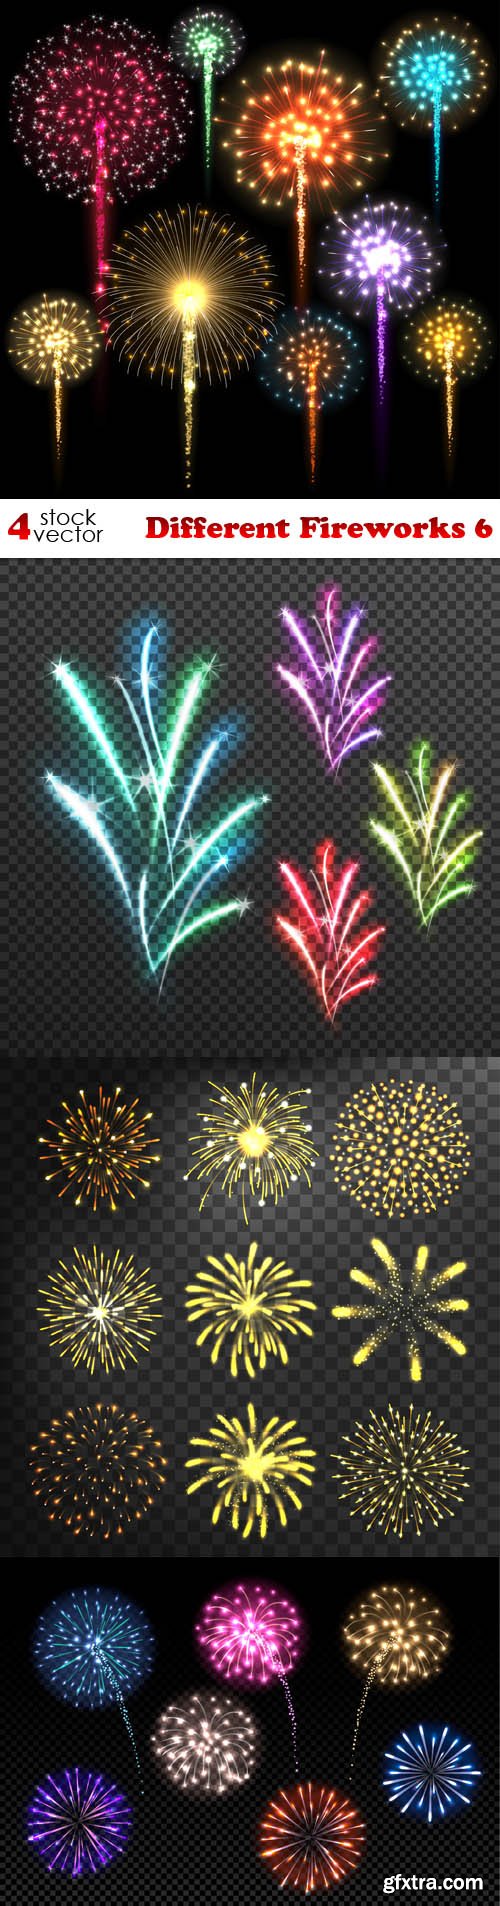 Vectors - Different Fireworks 6